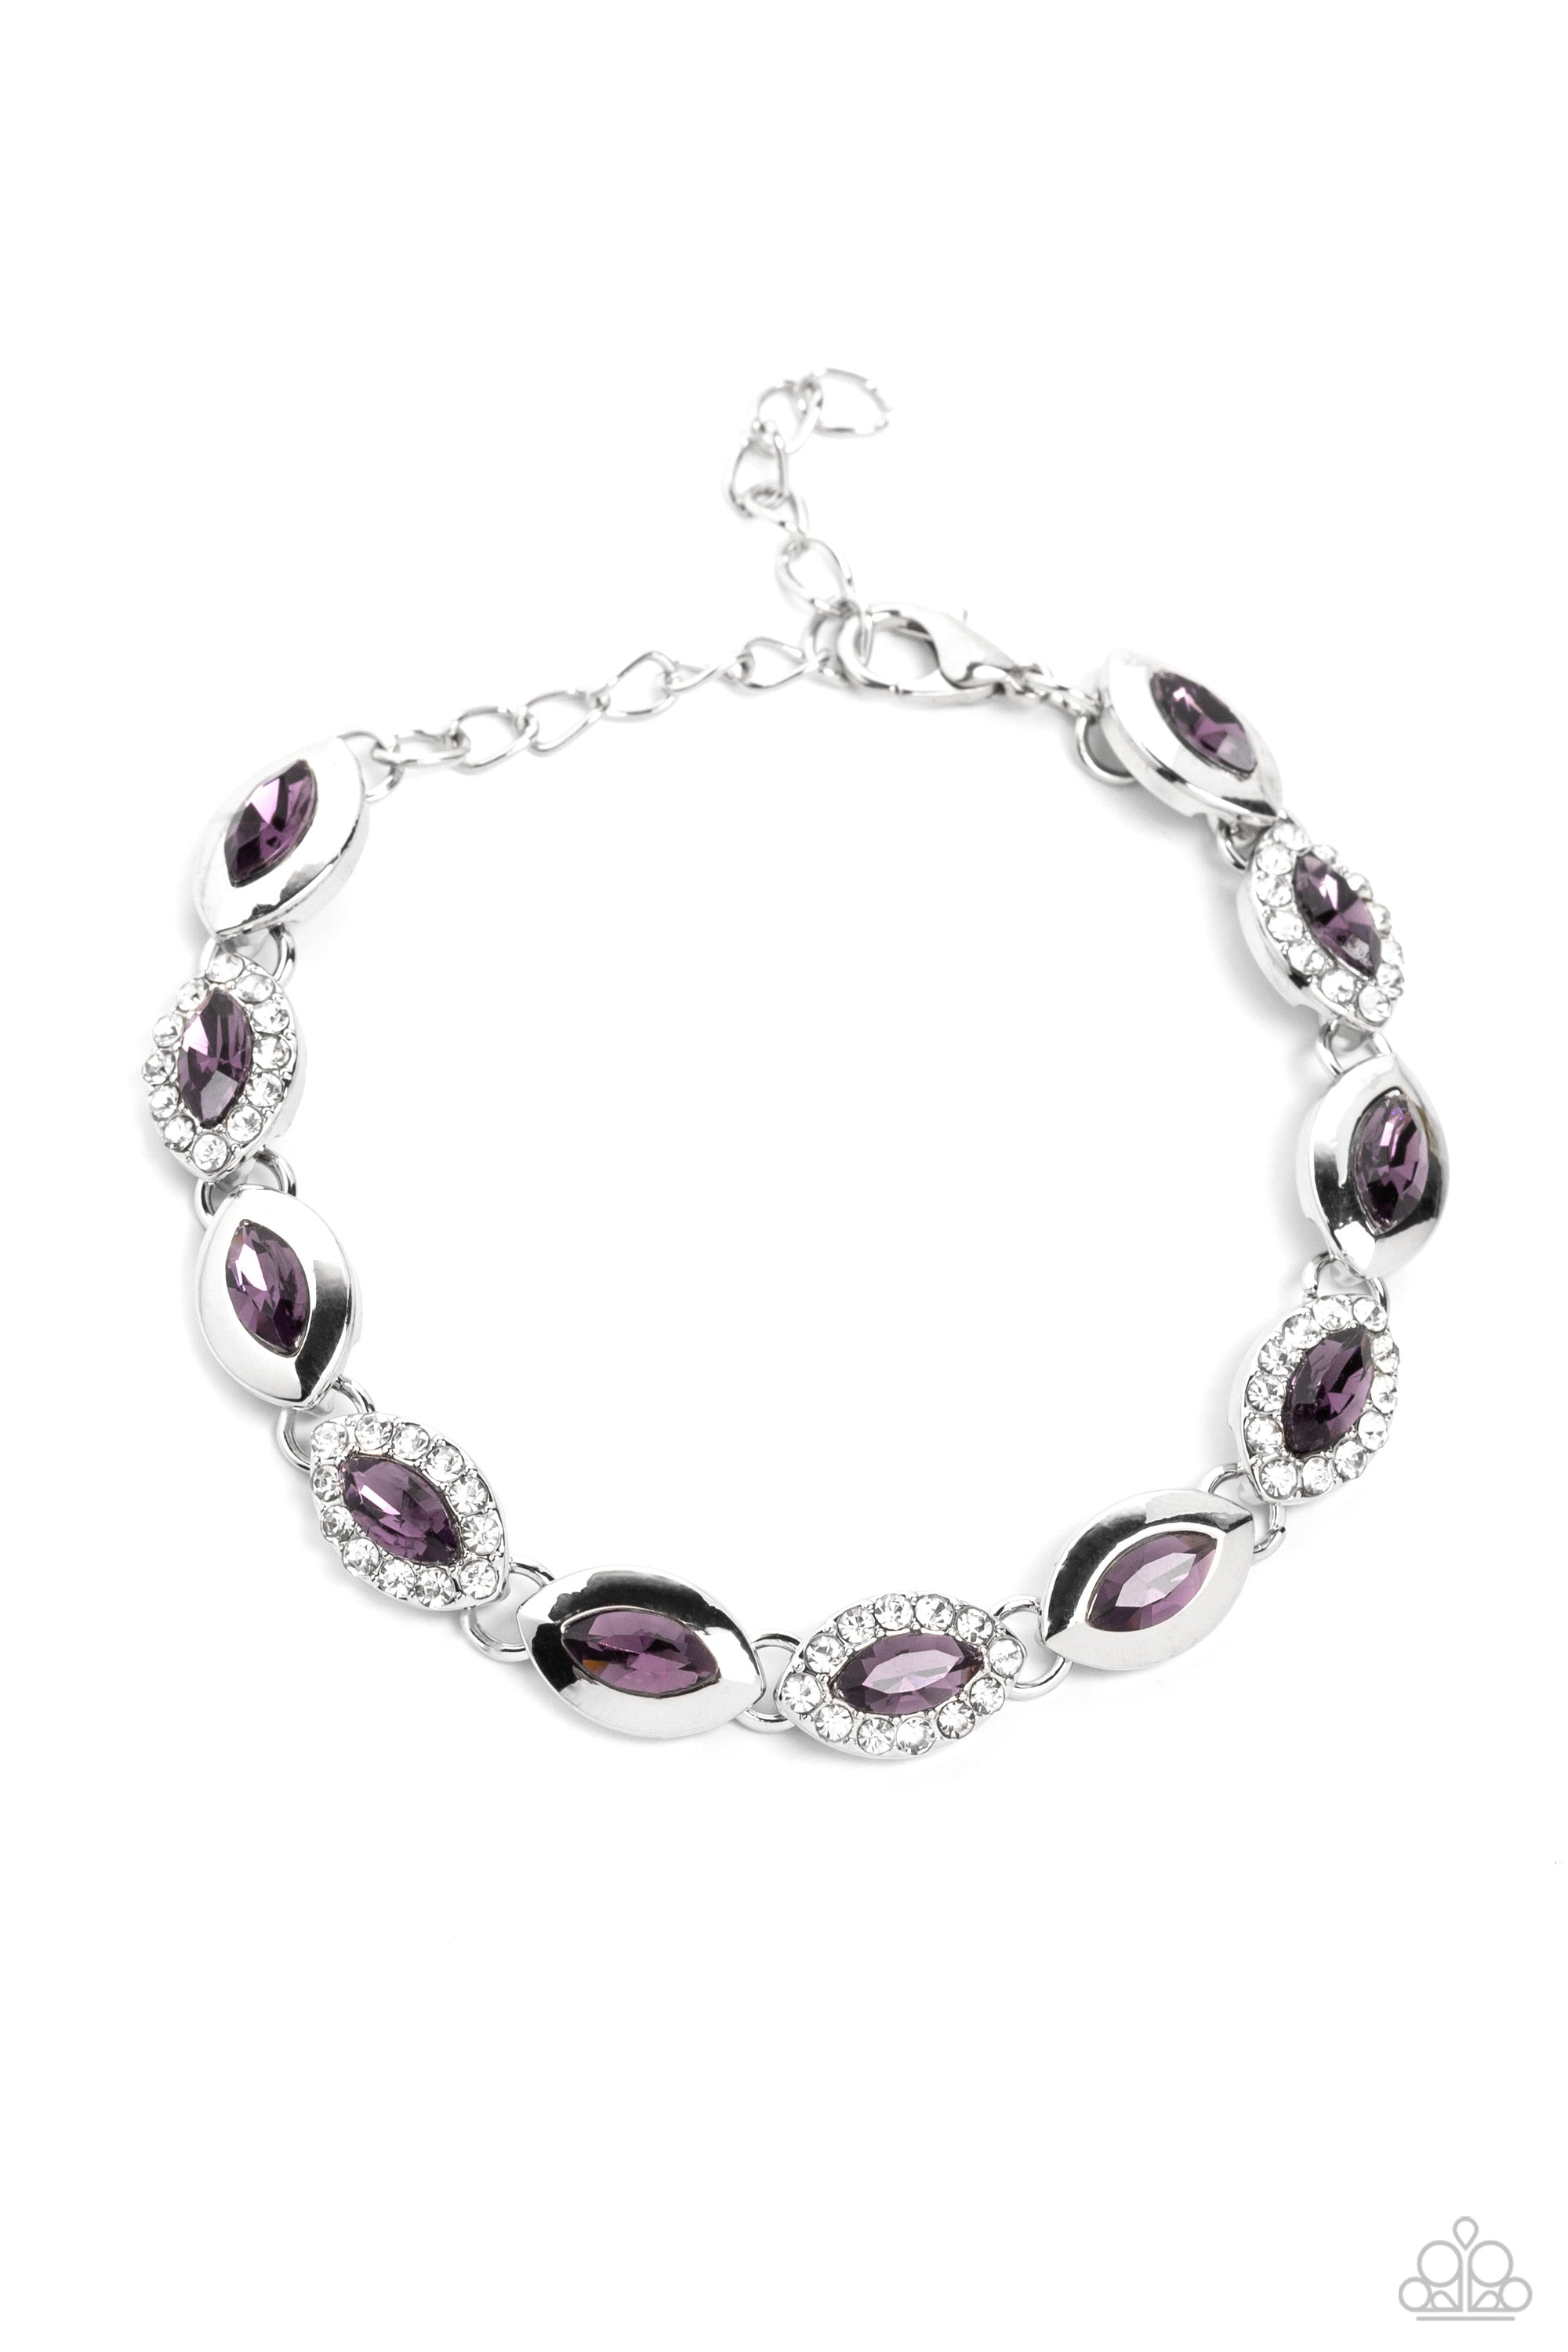 Some Serious Sparkle Purple Rhinestone Bracelet - Paparazzi Accessories- lightbox - CarasShop.com - $5 Jewelry by Cara Jewels